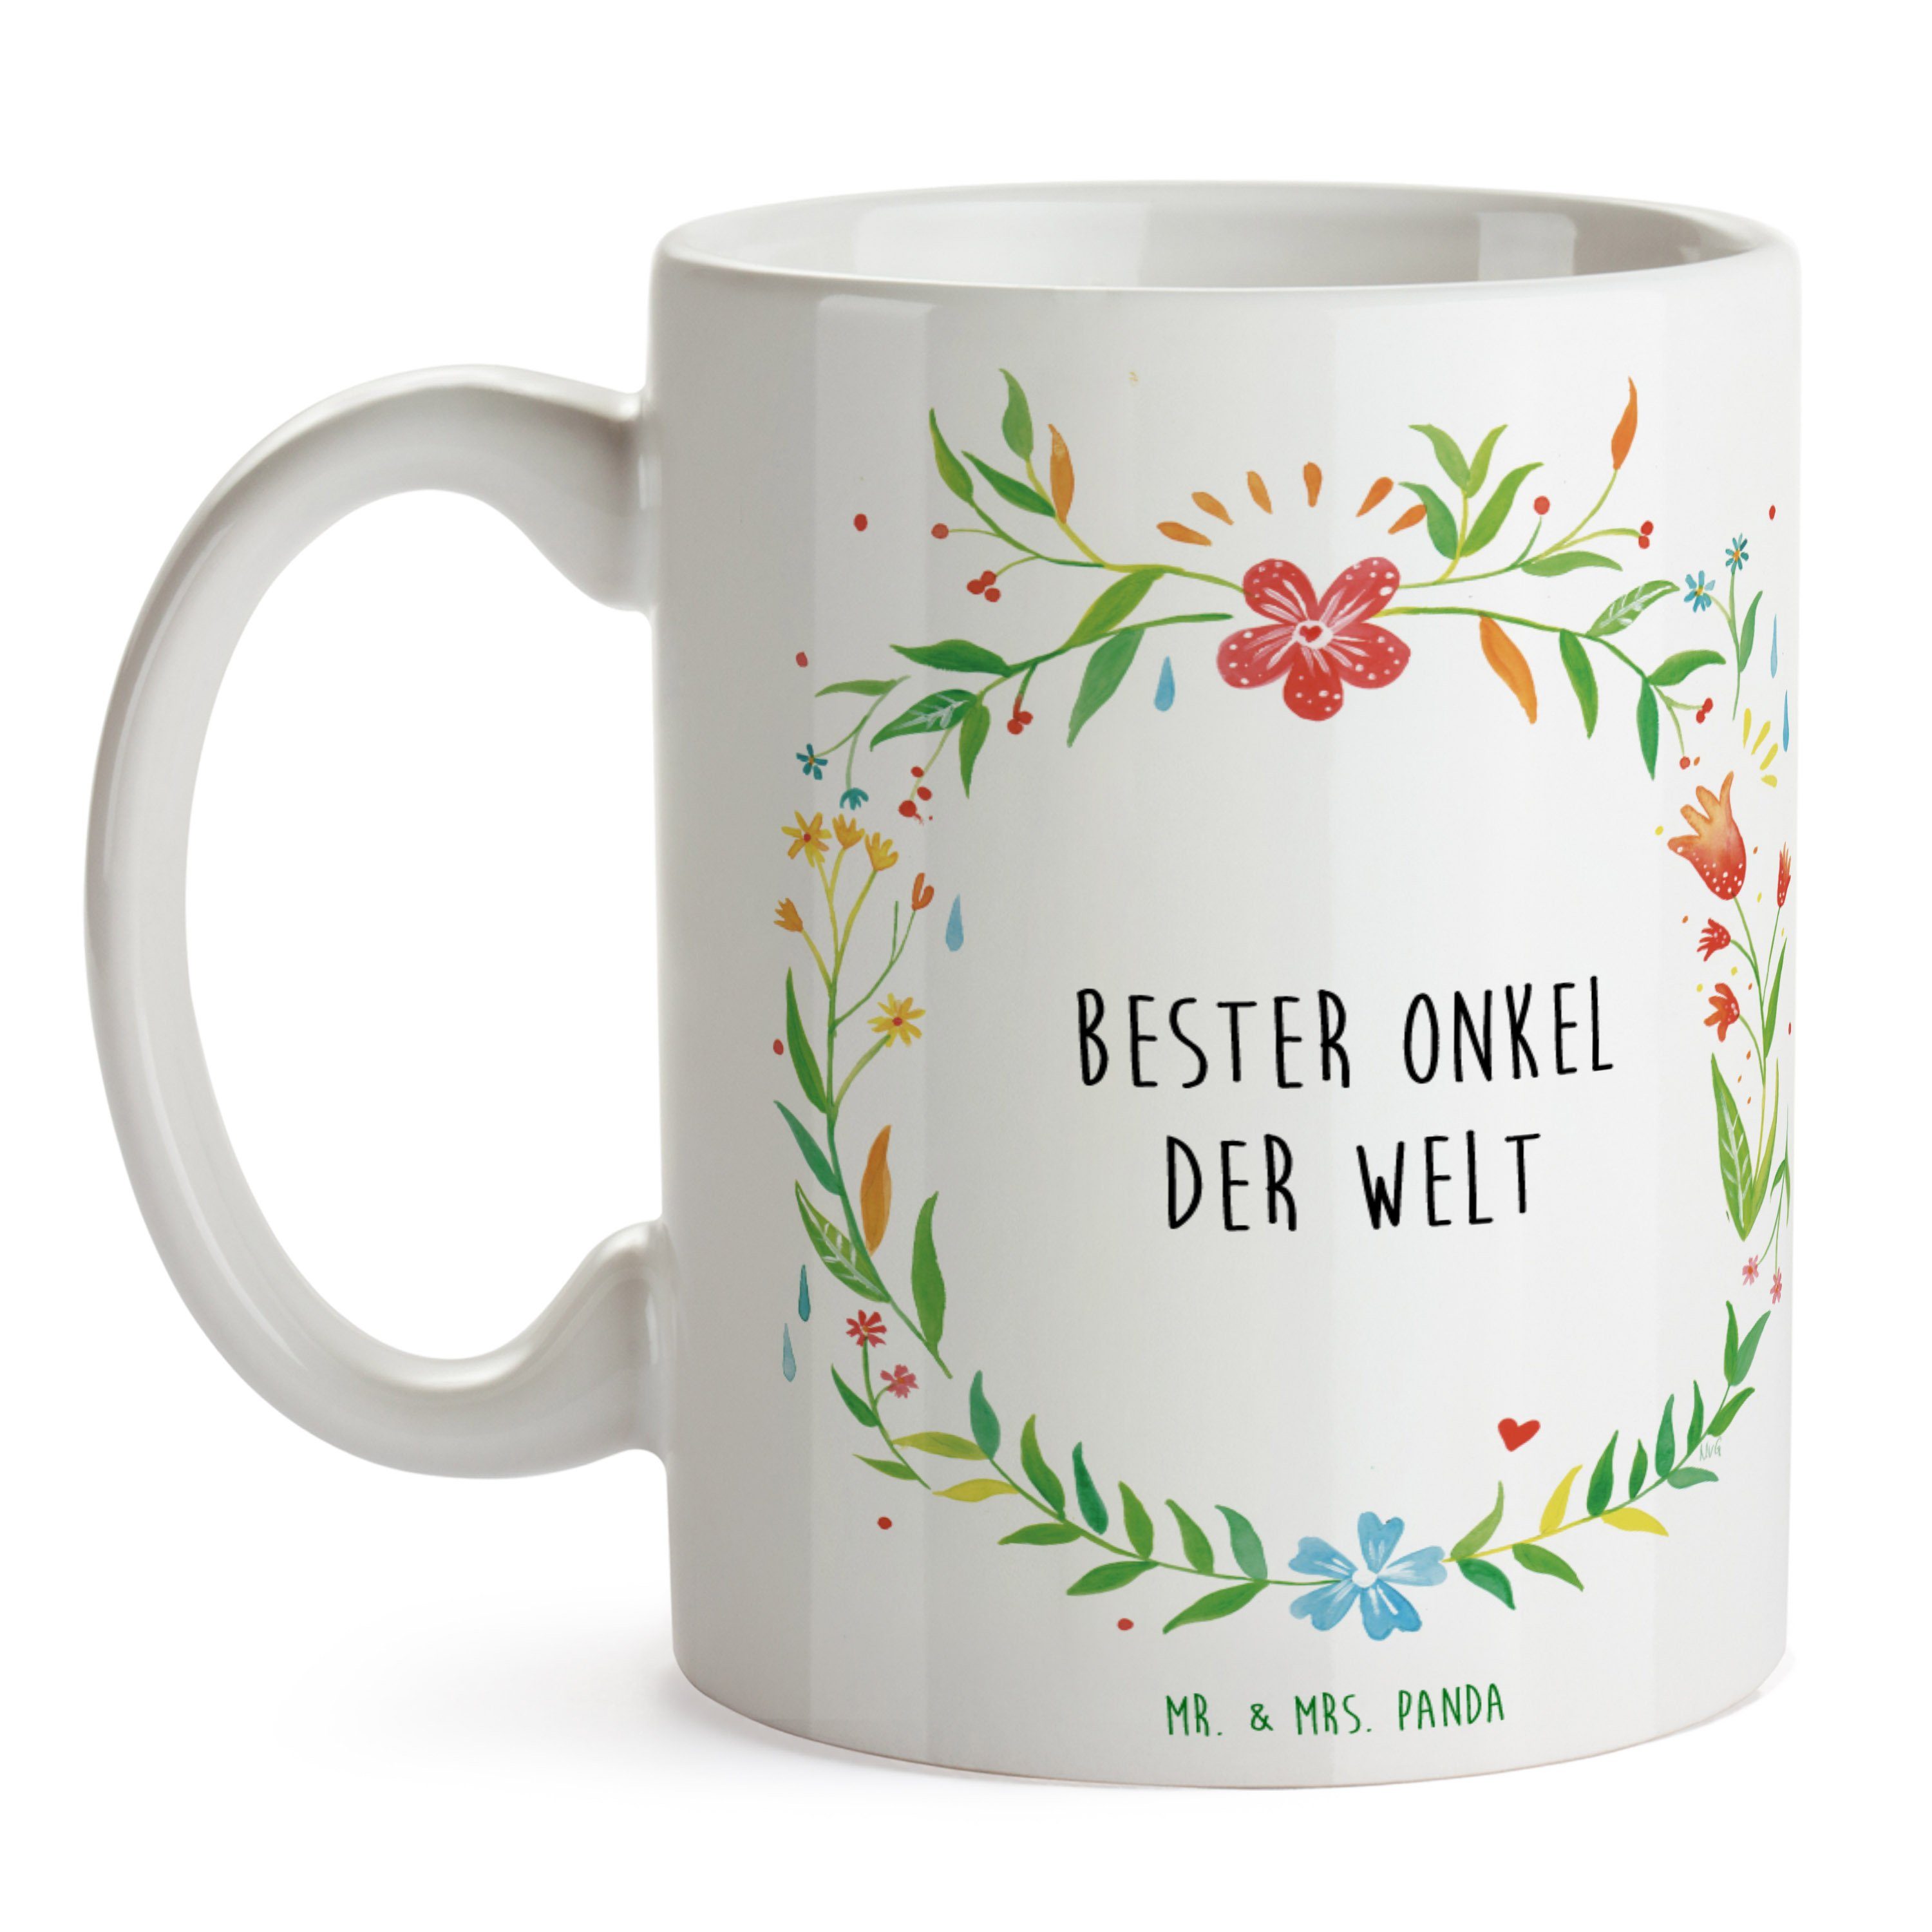 Mr. & Mrs. Panda Kesselleitstandführerin Diplom, Tasse Teet, Keramik Tasse, - Geschenk, Kaffeebecher